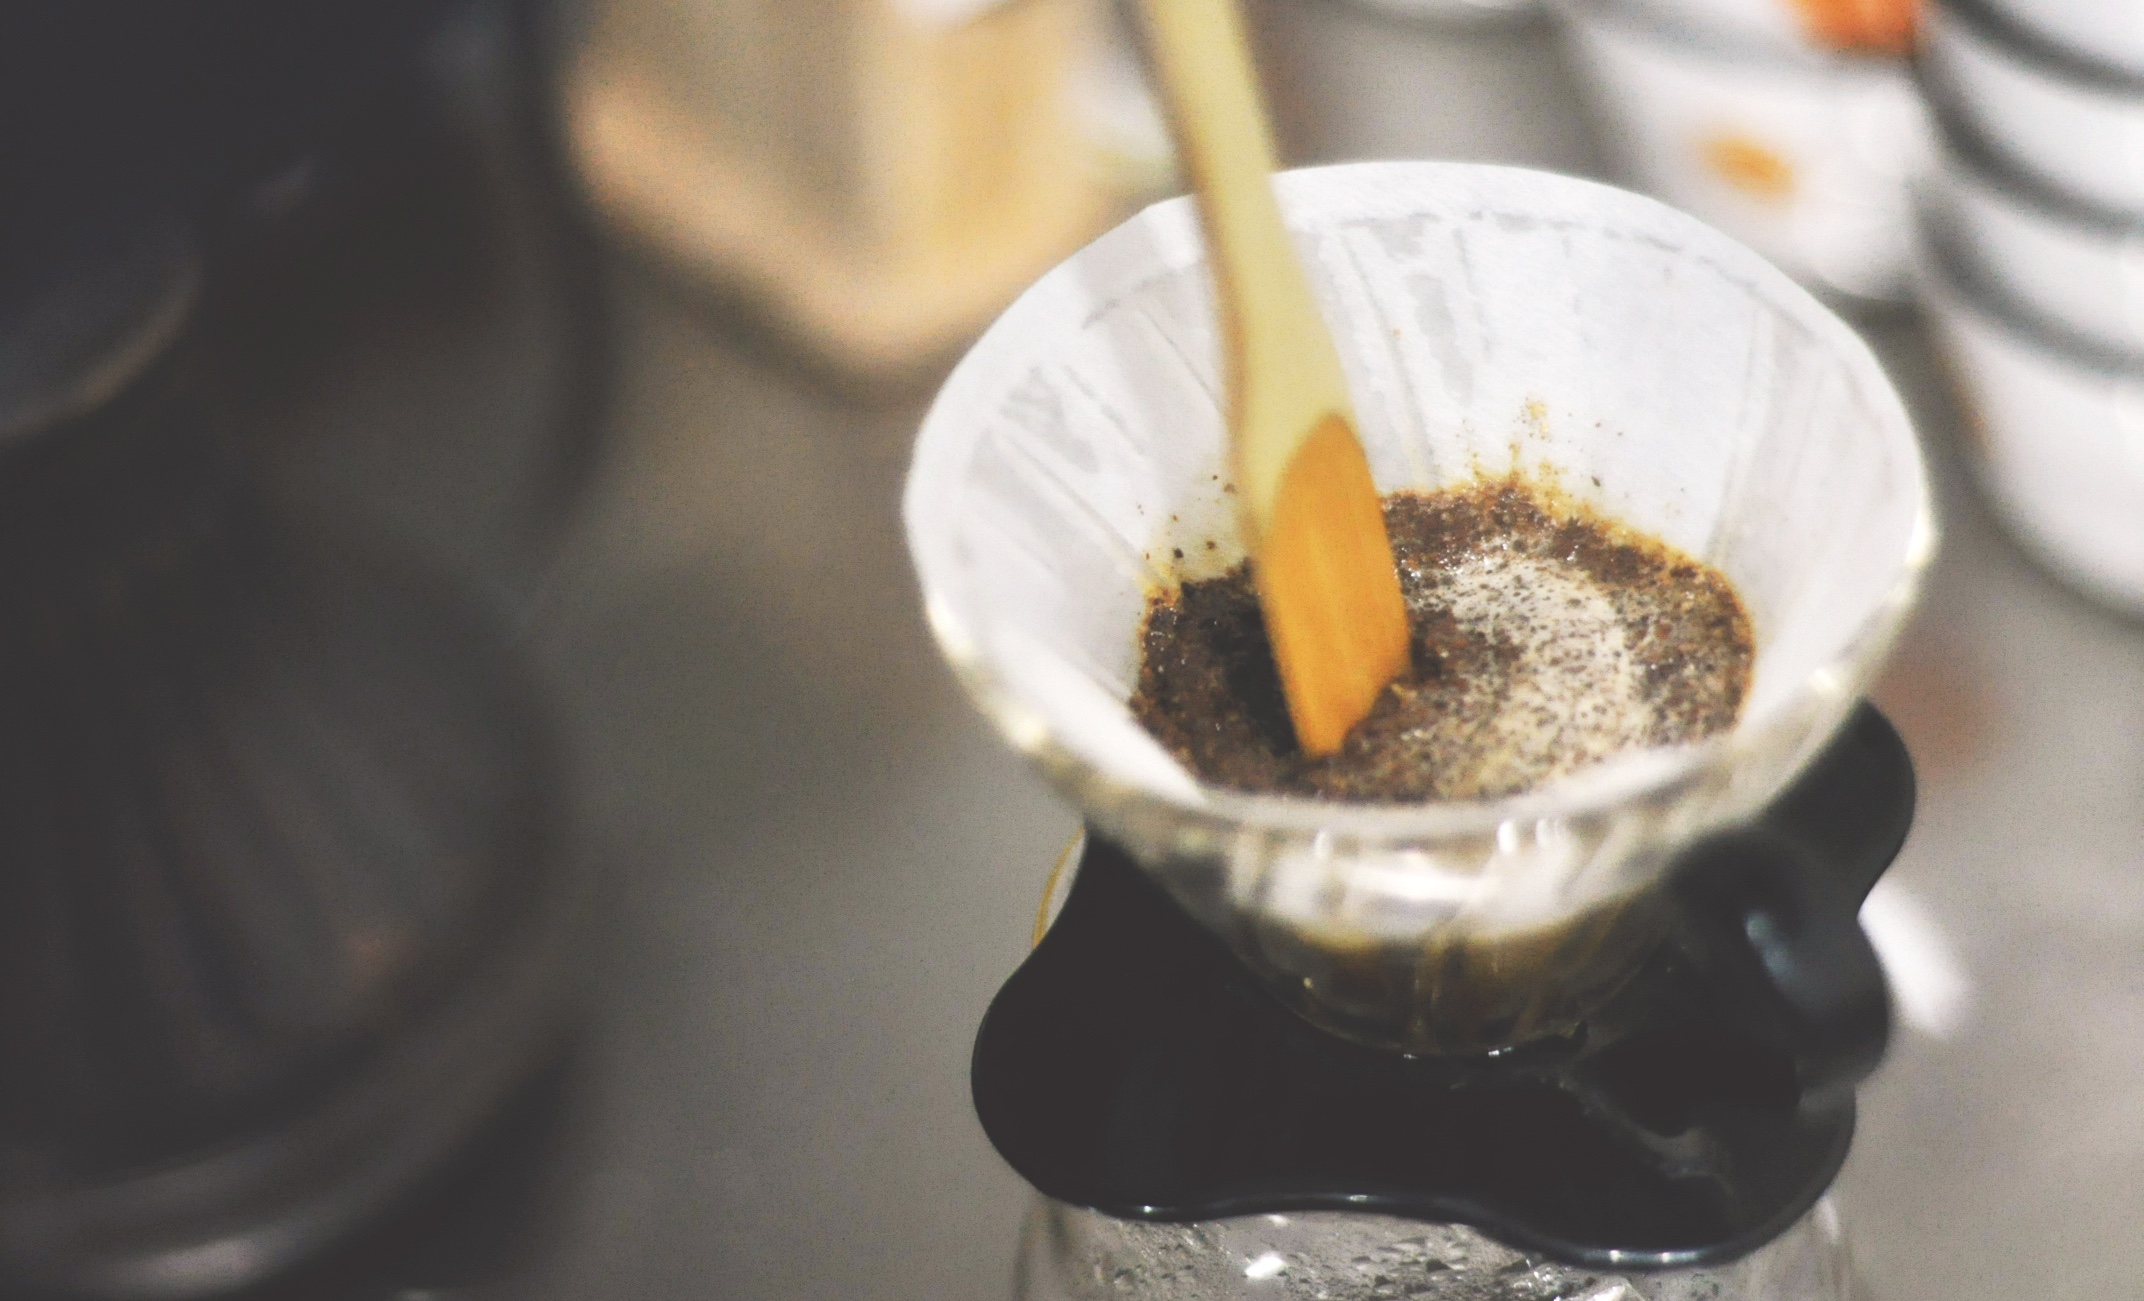 Learn how to make coffee; how to stir to make good coffee